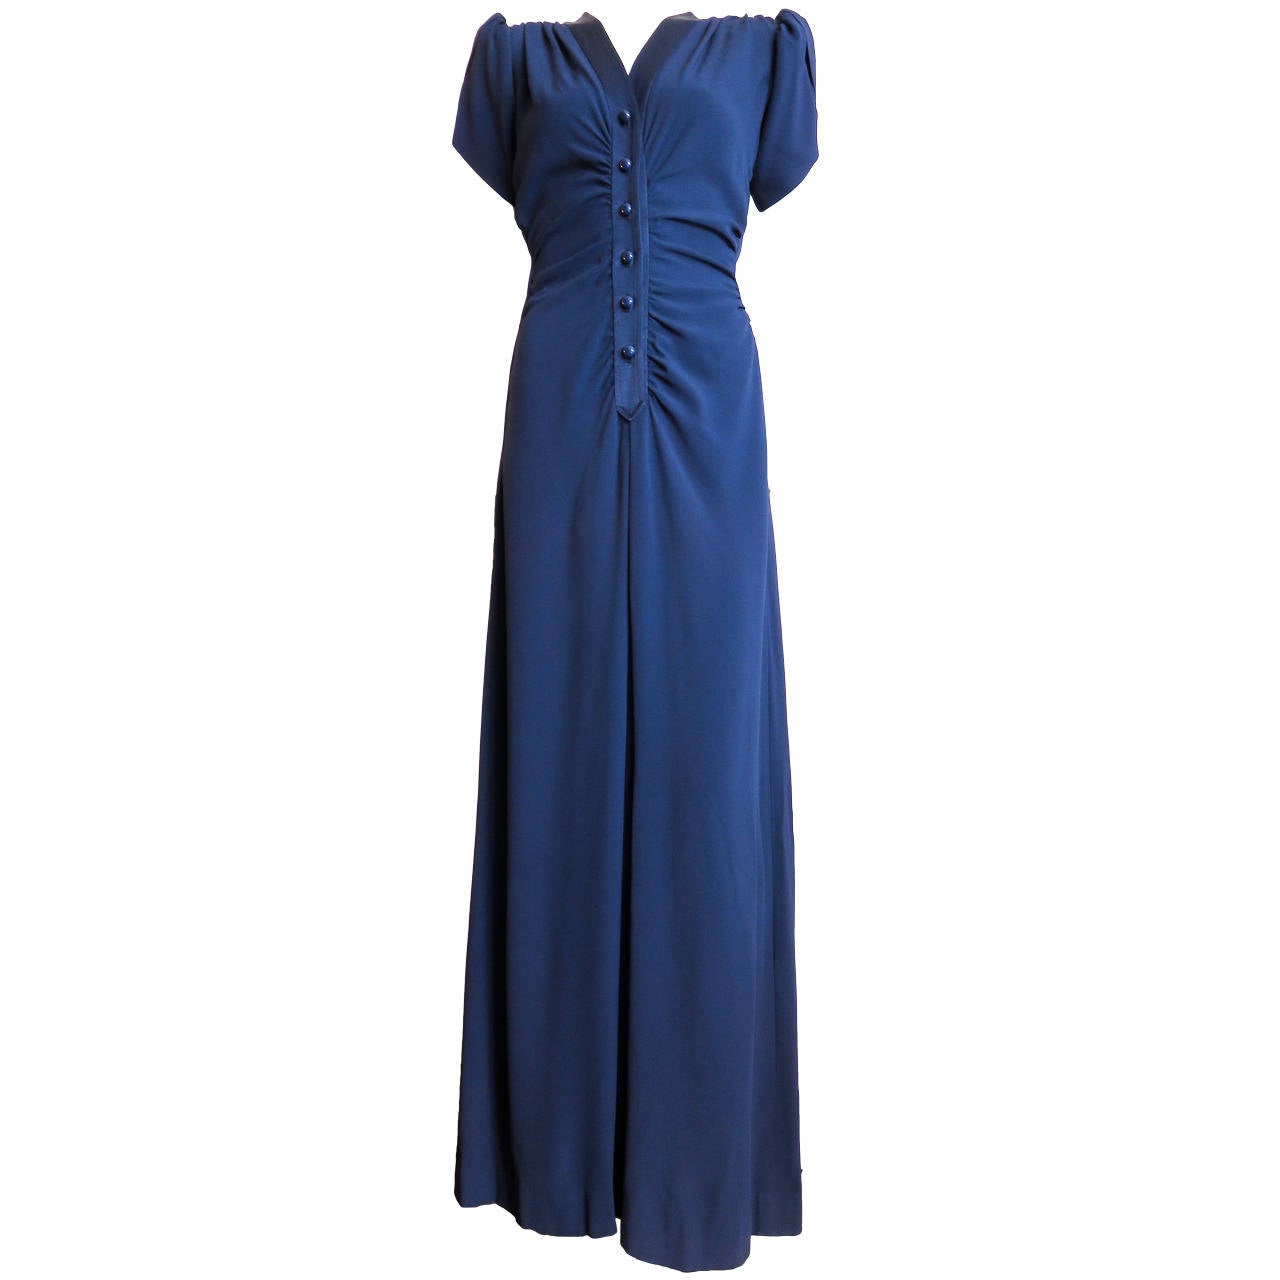 1983 YVES SAINT LAURENT 40's style blue crepe dress For Sale